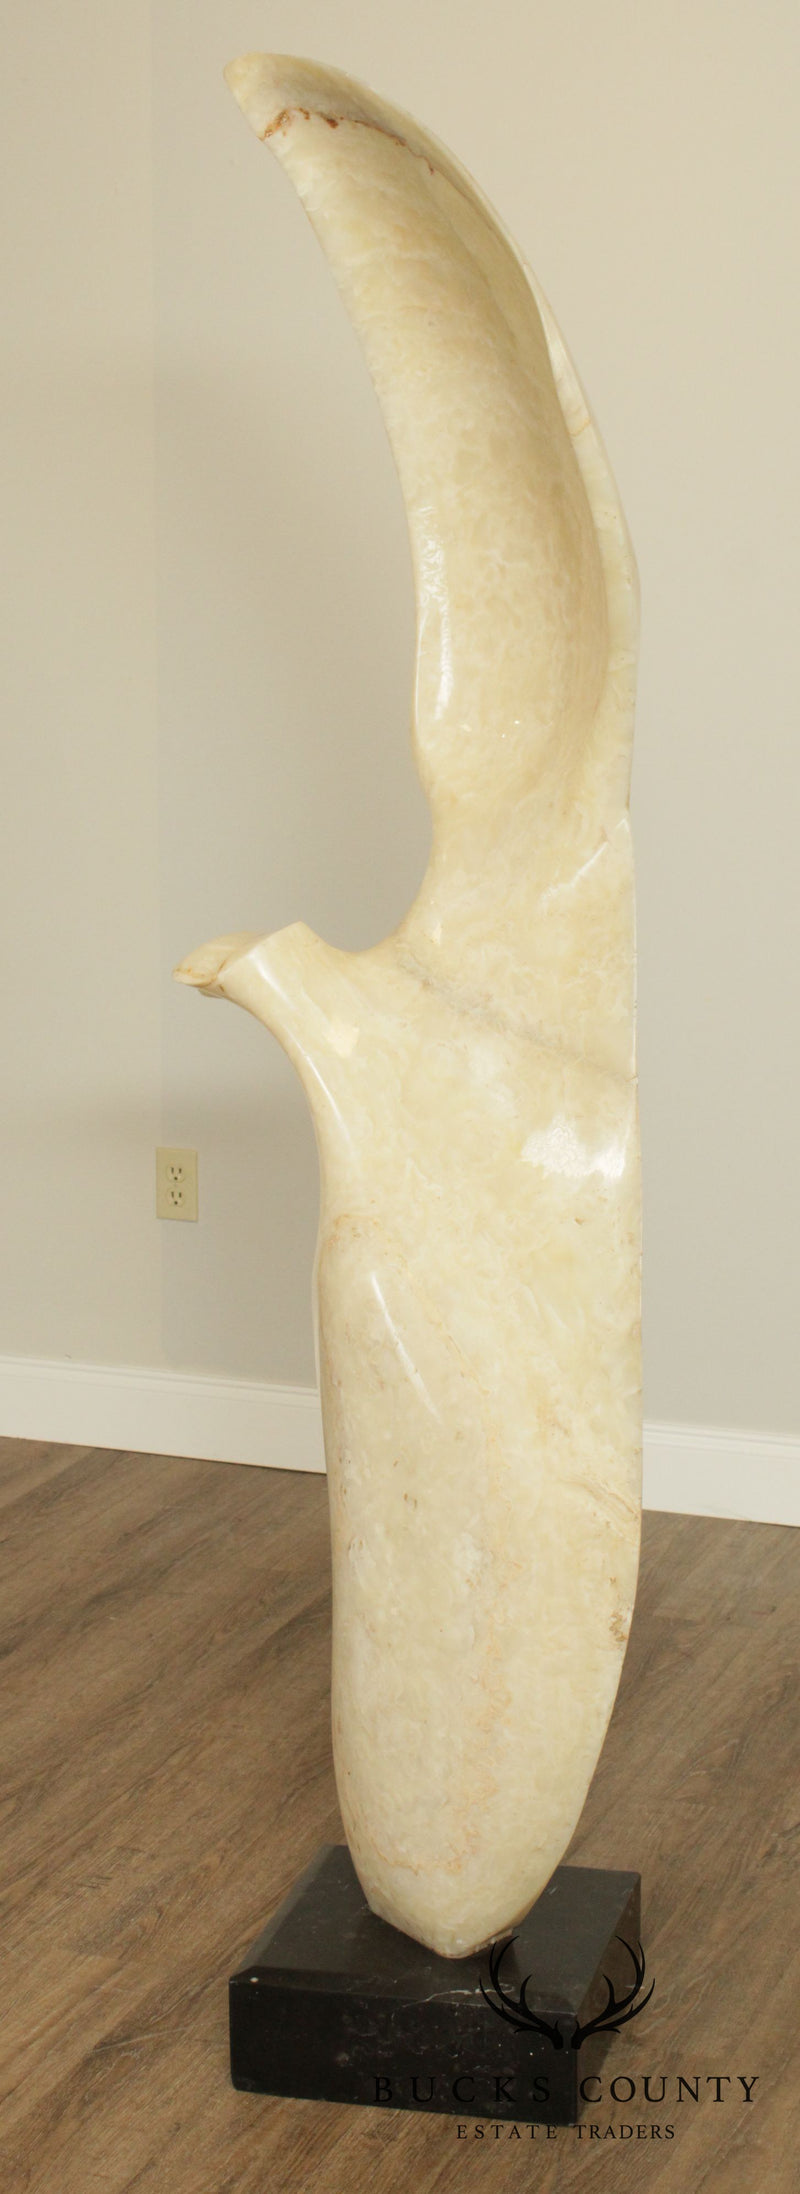 Leonardo Nierman Monumental Bird in Flight Onyx Abstract Sculpture